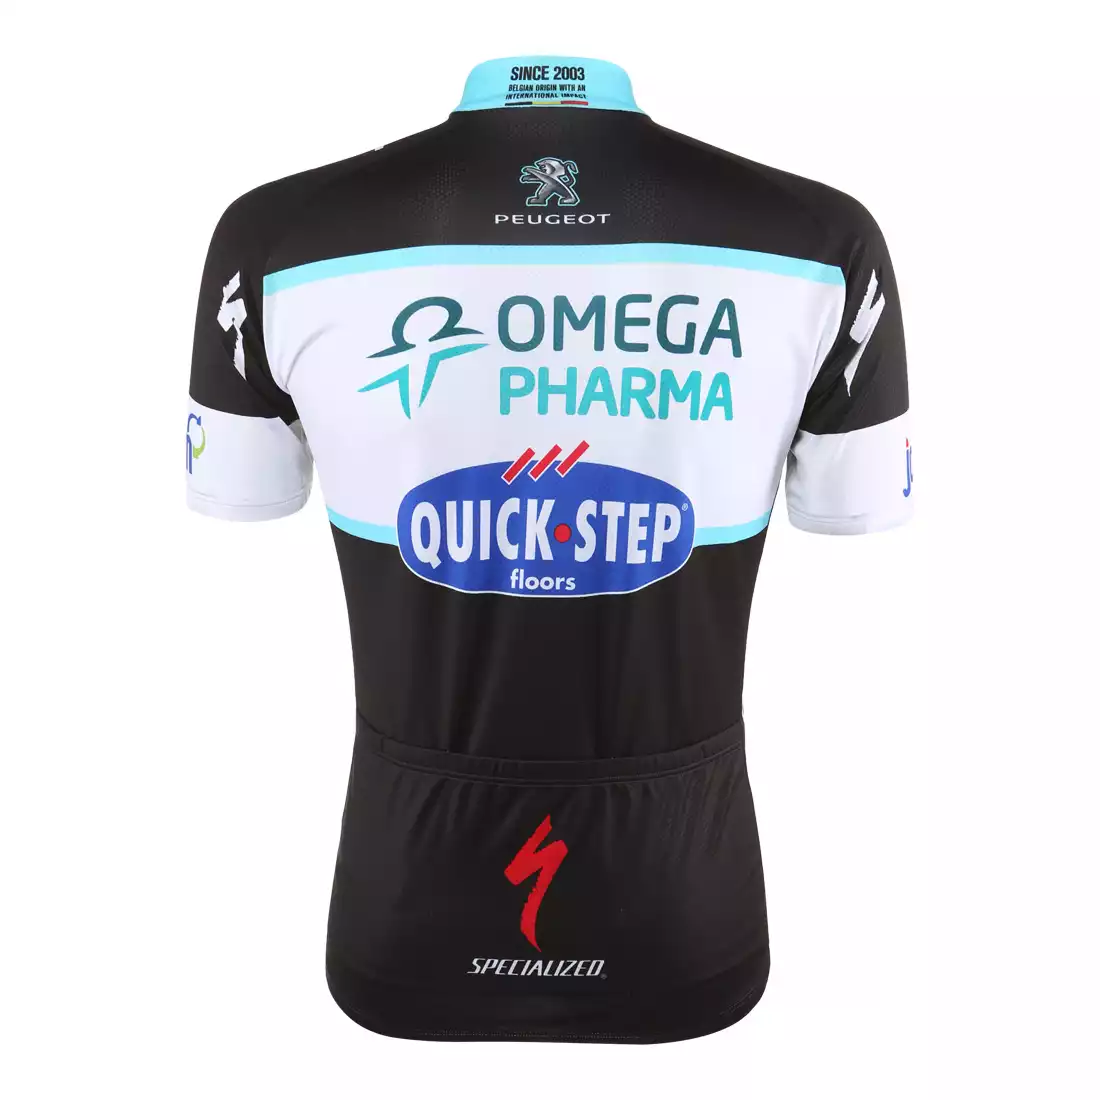 VERMARC - koszulka rowerowa OMEGA PHARMA 2014, pełny zamek